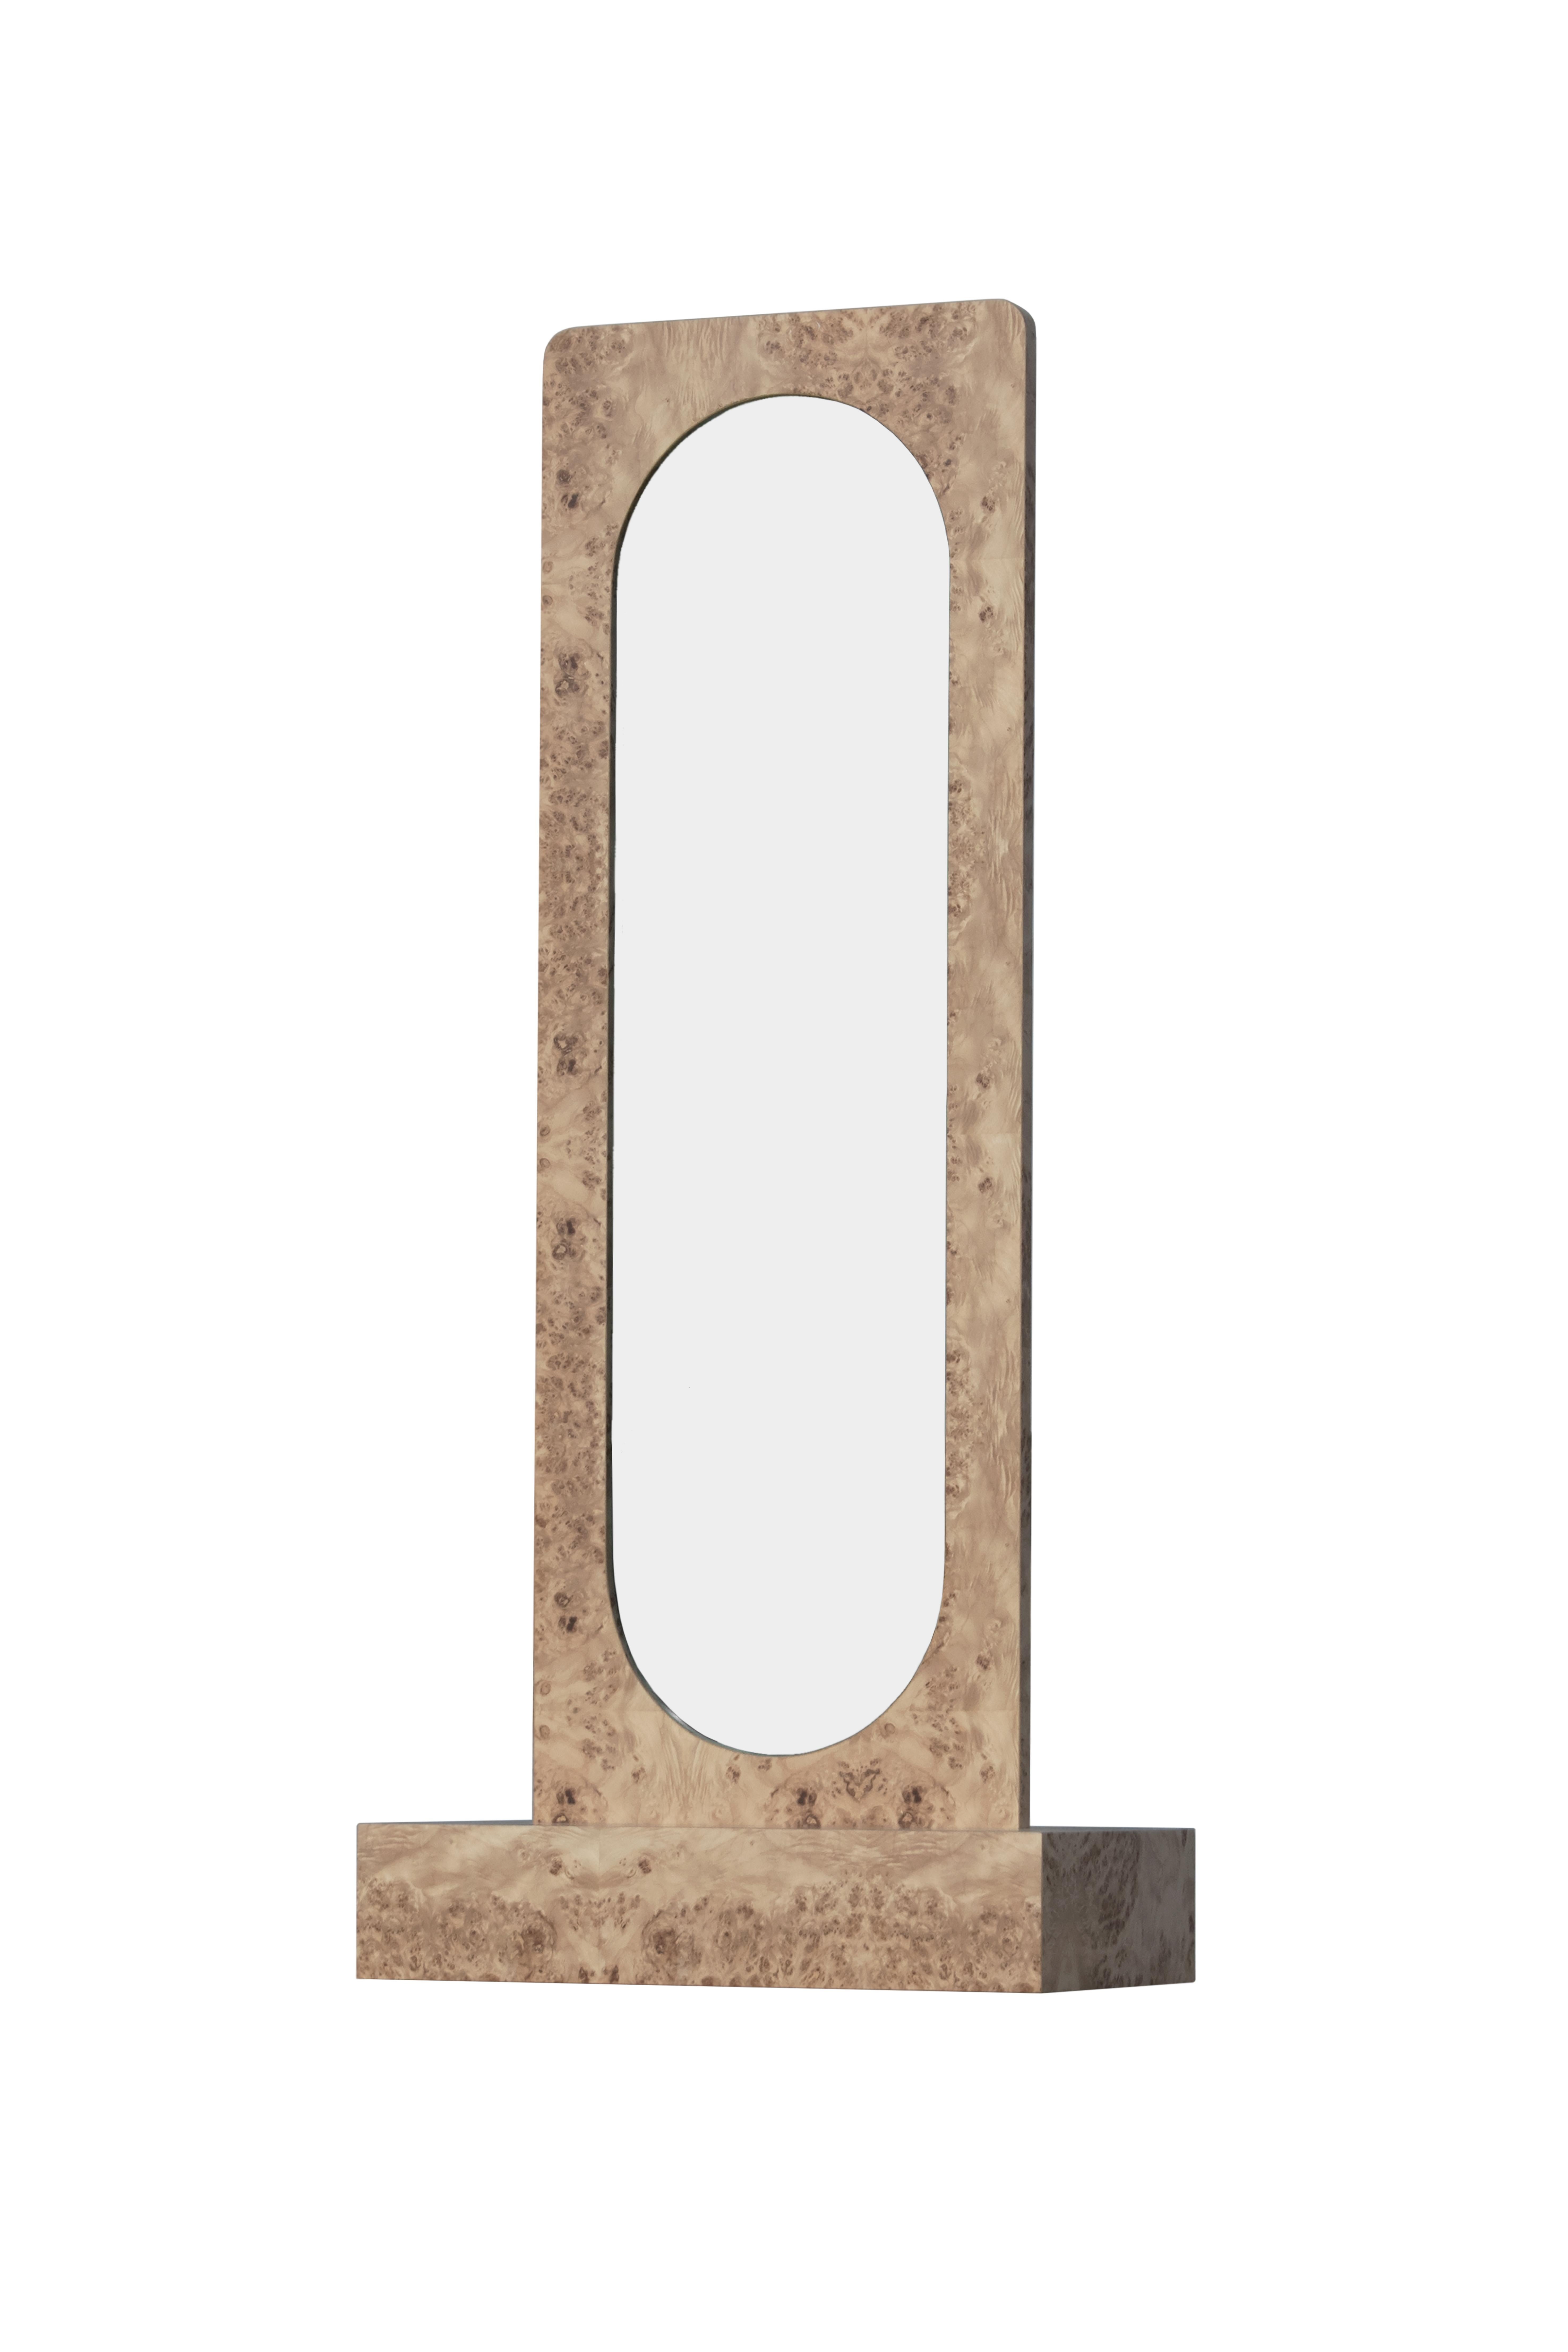 EPIFANIA Mappa Burl Veneer Standing Mirror in Natural Beige Color For Sale